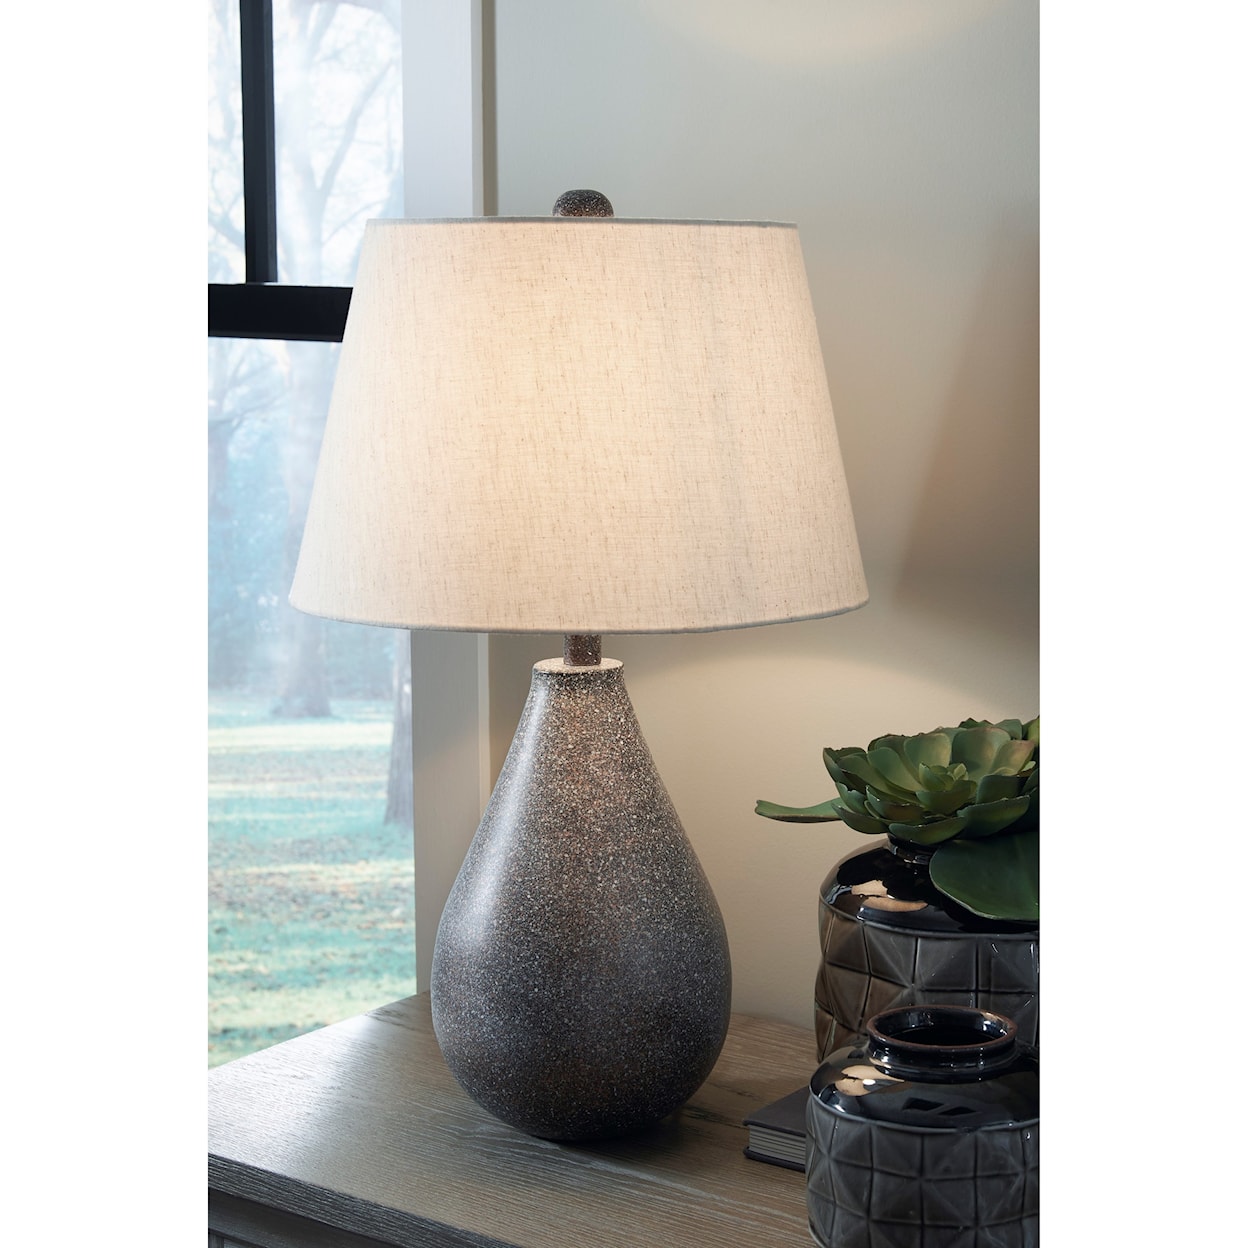 Ashley Furniture Signature Design Lamps - Contemporary Set of 2 Bateman Patina Metal Table Lamps